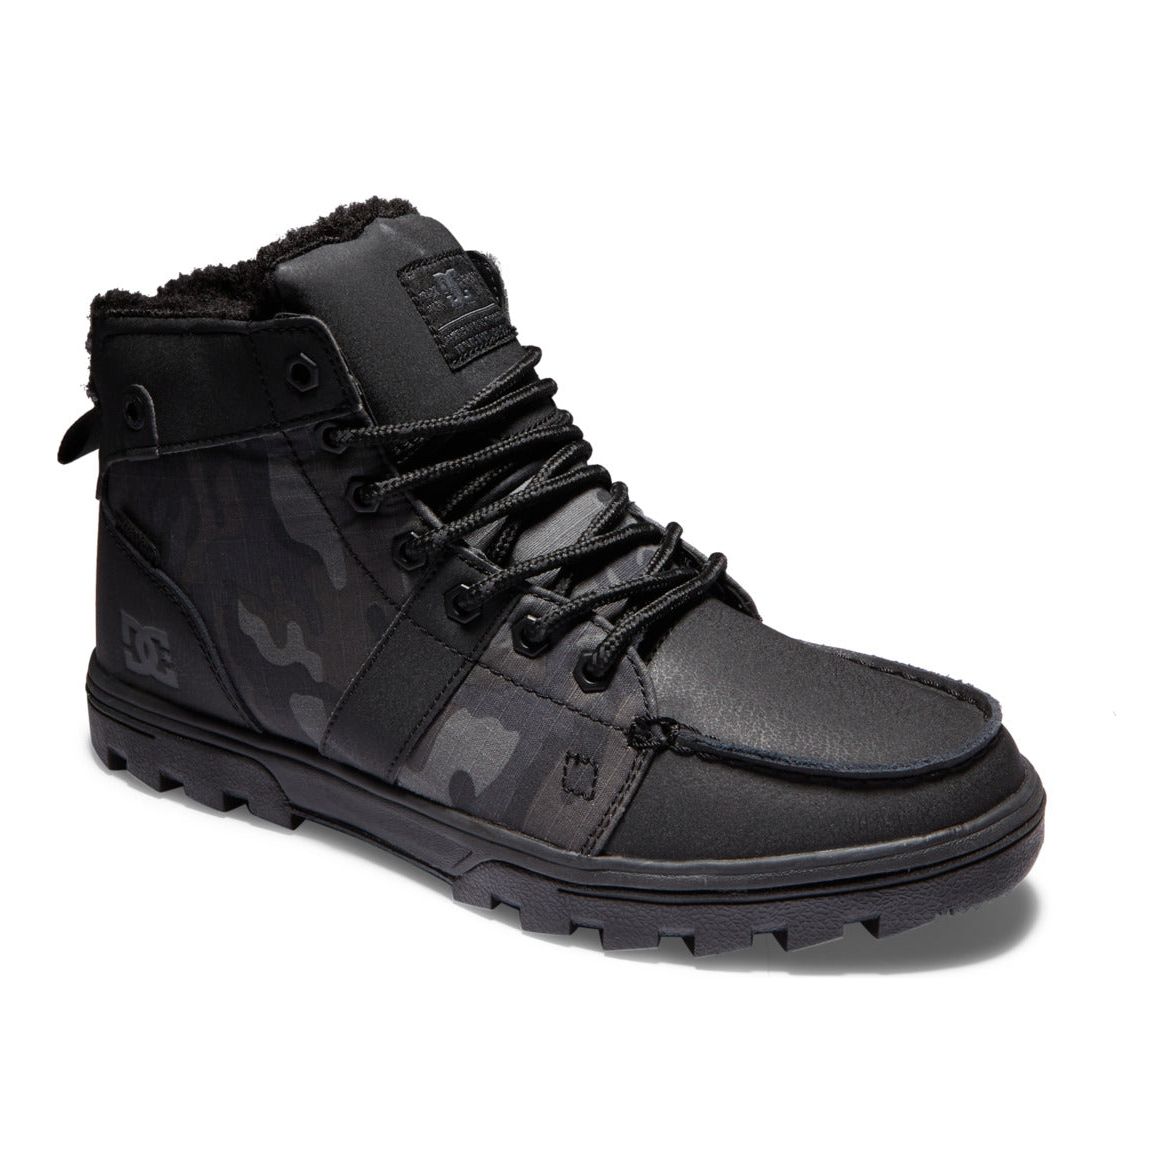 Buy Woodland Men's Black Leather Sneakers - 8 UK/India (42 EU) (GC  0863110Y15) at Amazon.in